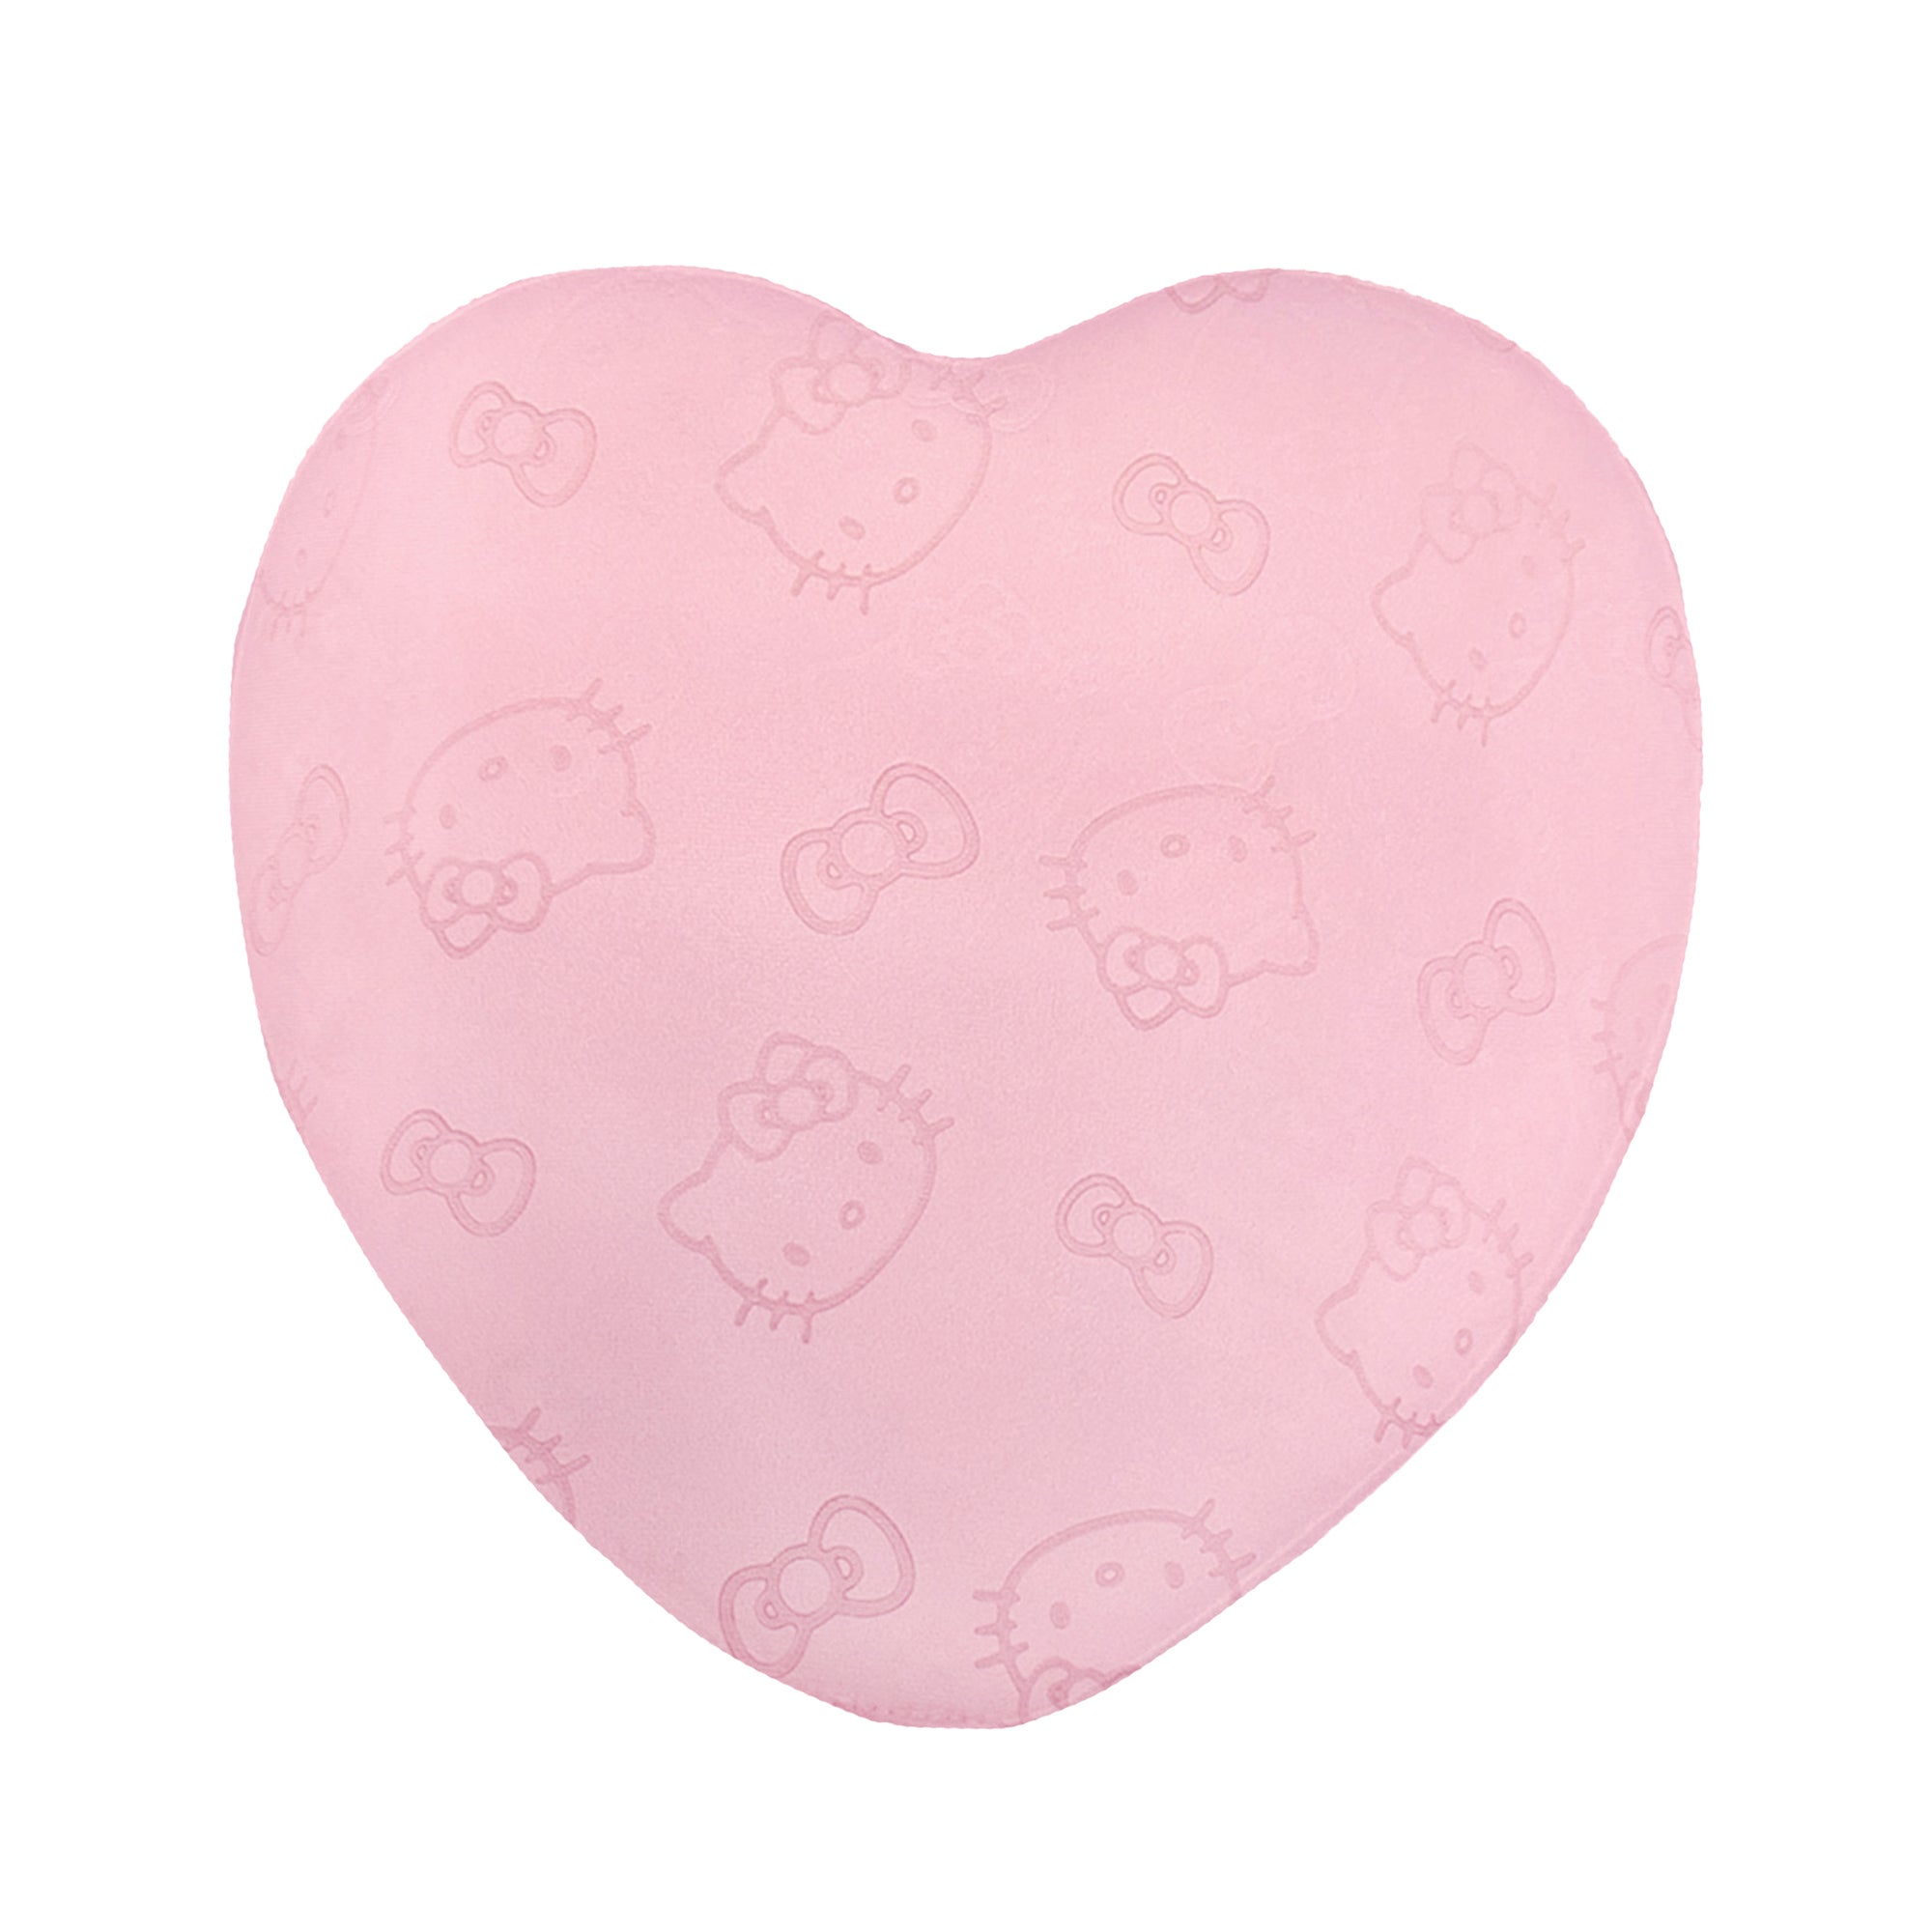 Hello Kitty x Impressions Vanity Heart Ottoman (Pink) Home Goods Impressions Vanity   